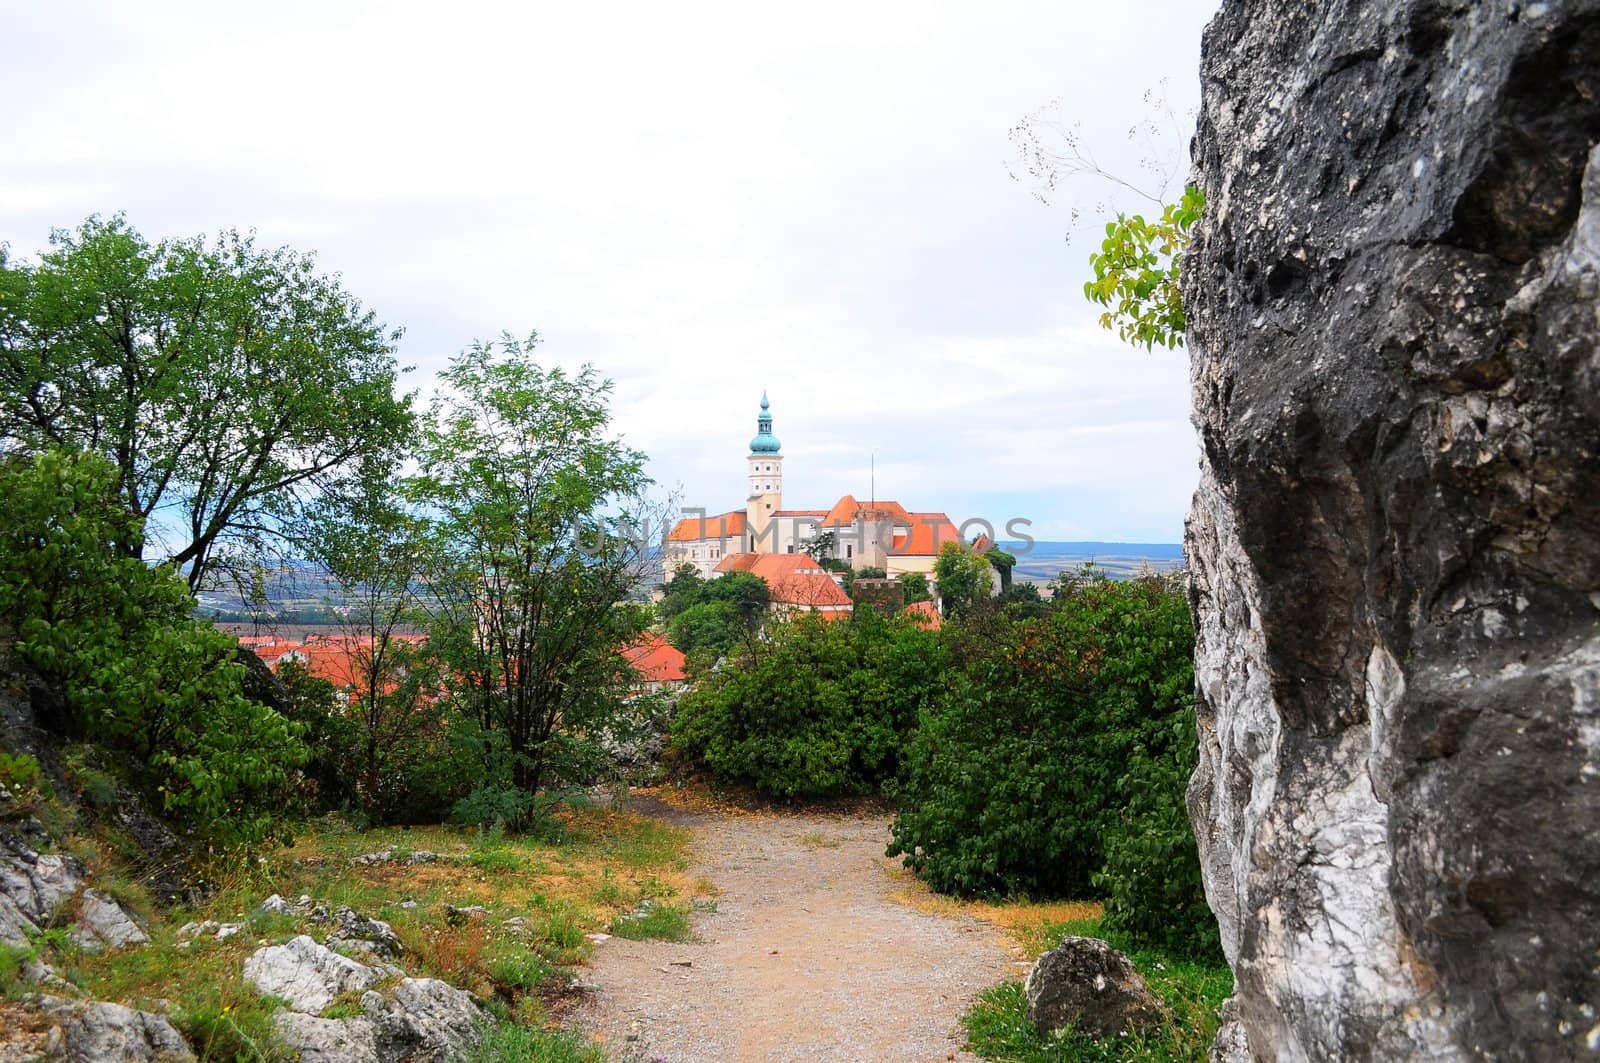 View of the castle complex in Mikulov, Czech Republic by AnnaNouvier